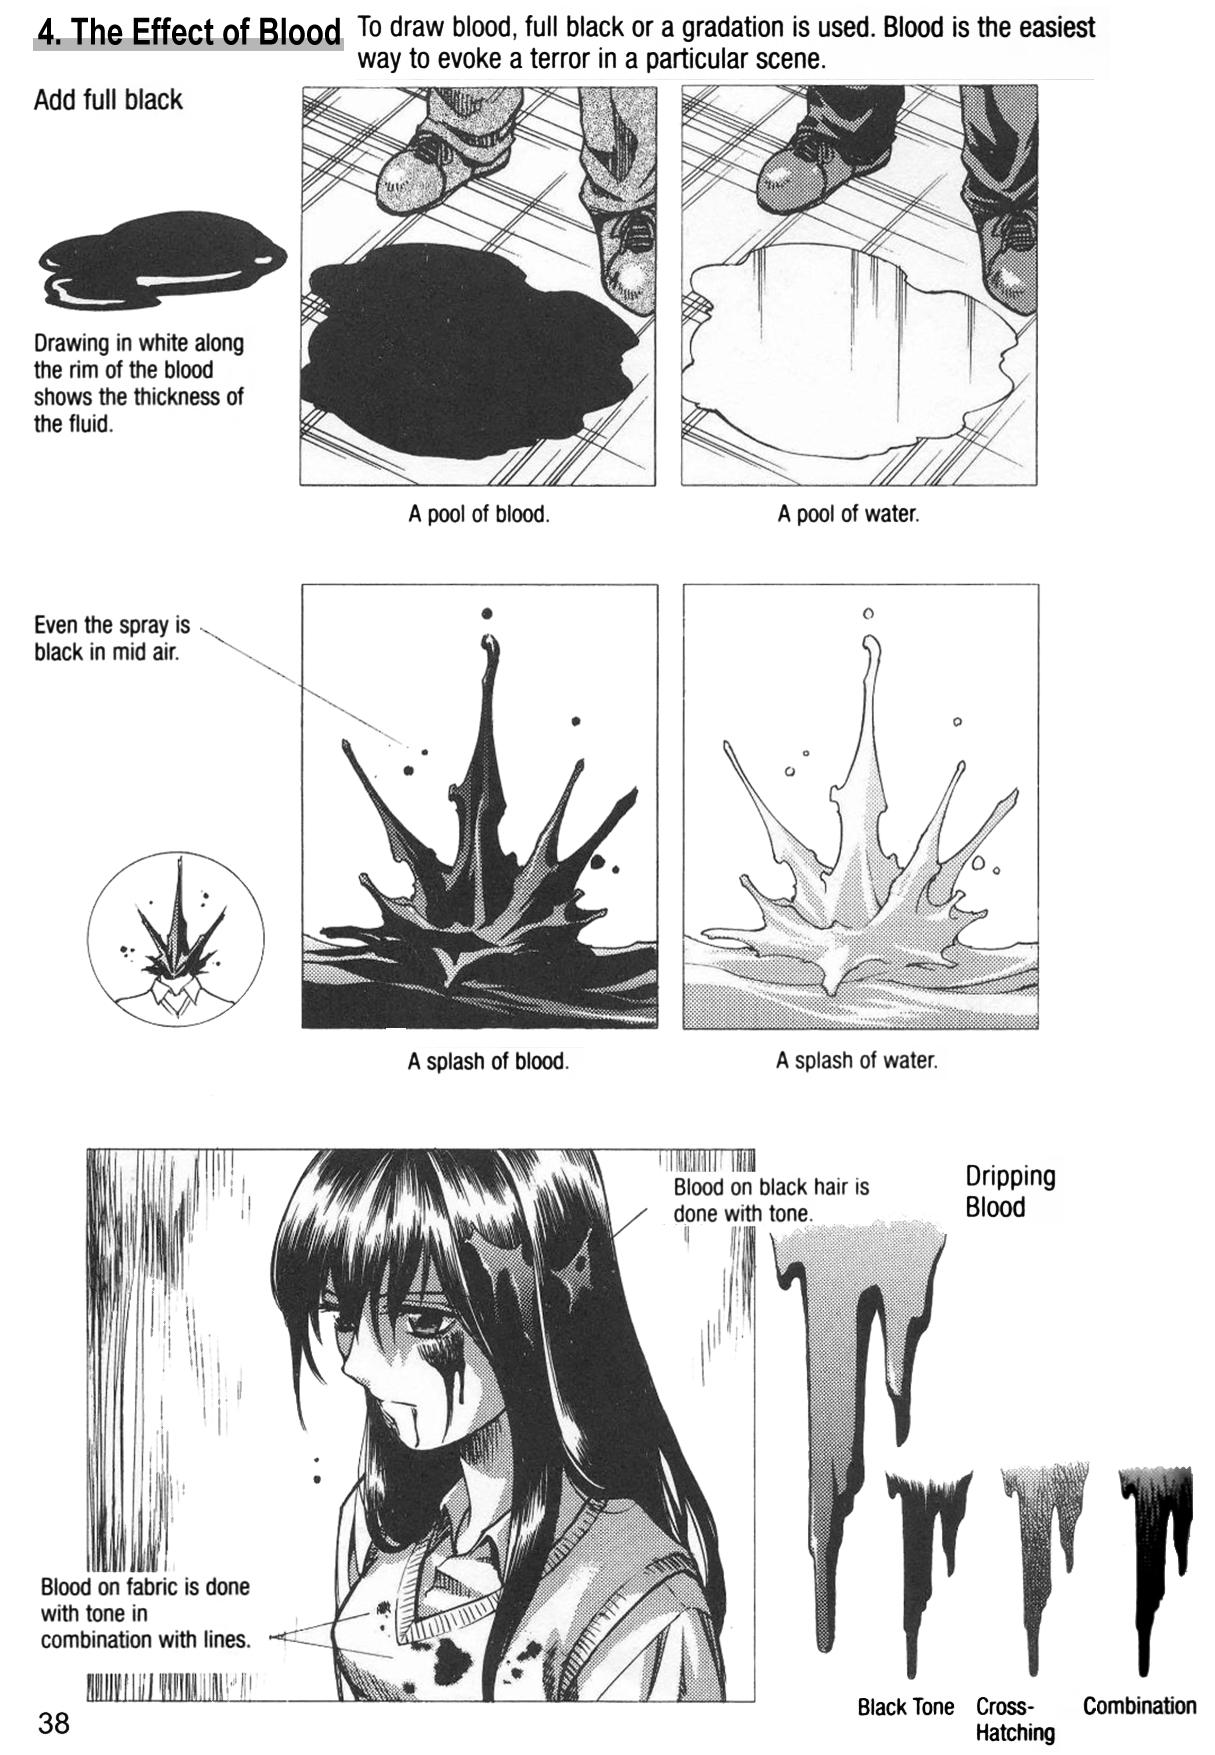 How to Draw Manga Vol. 24, Occult & Horror by Hikaru Hayashi 41